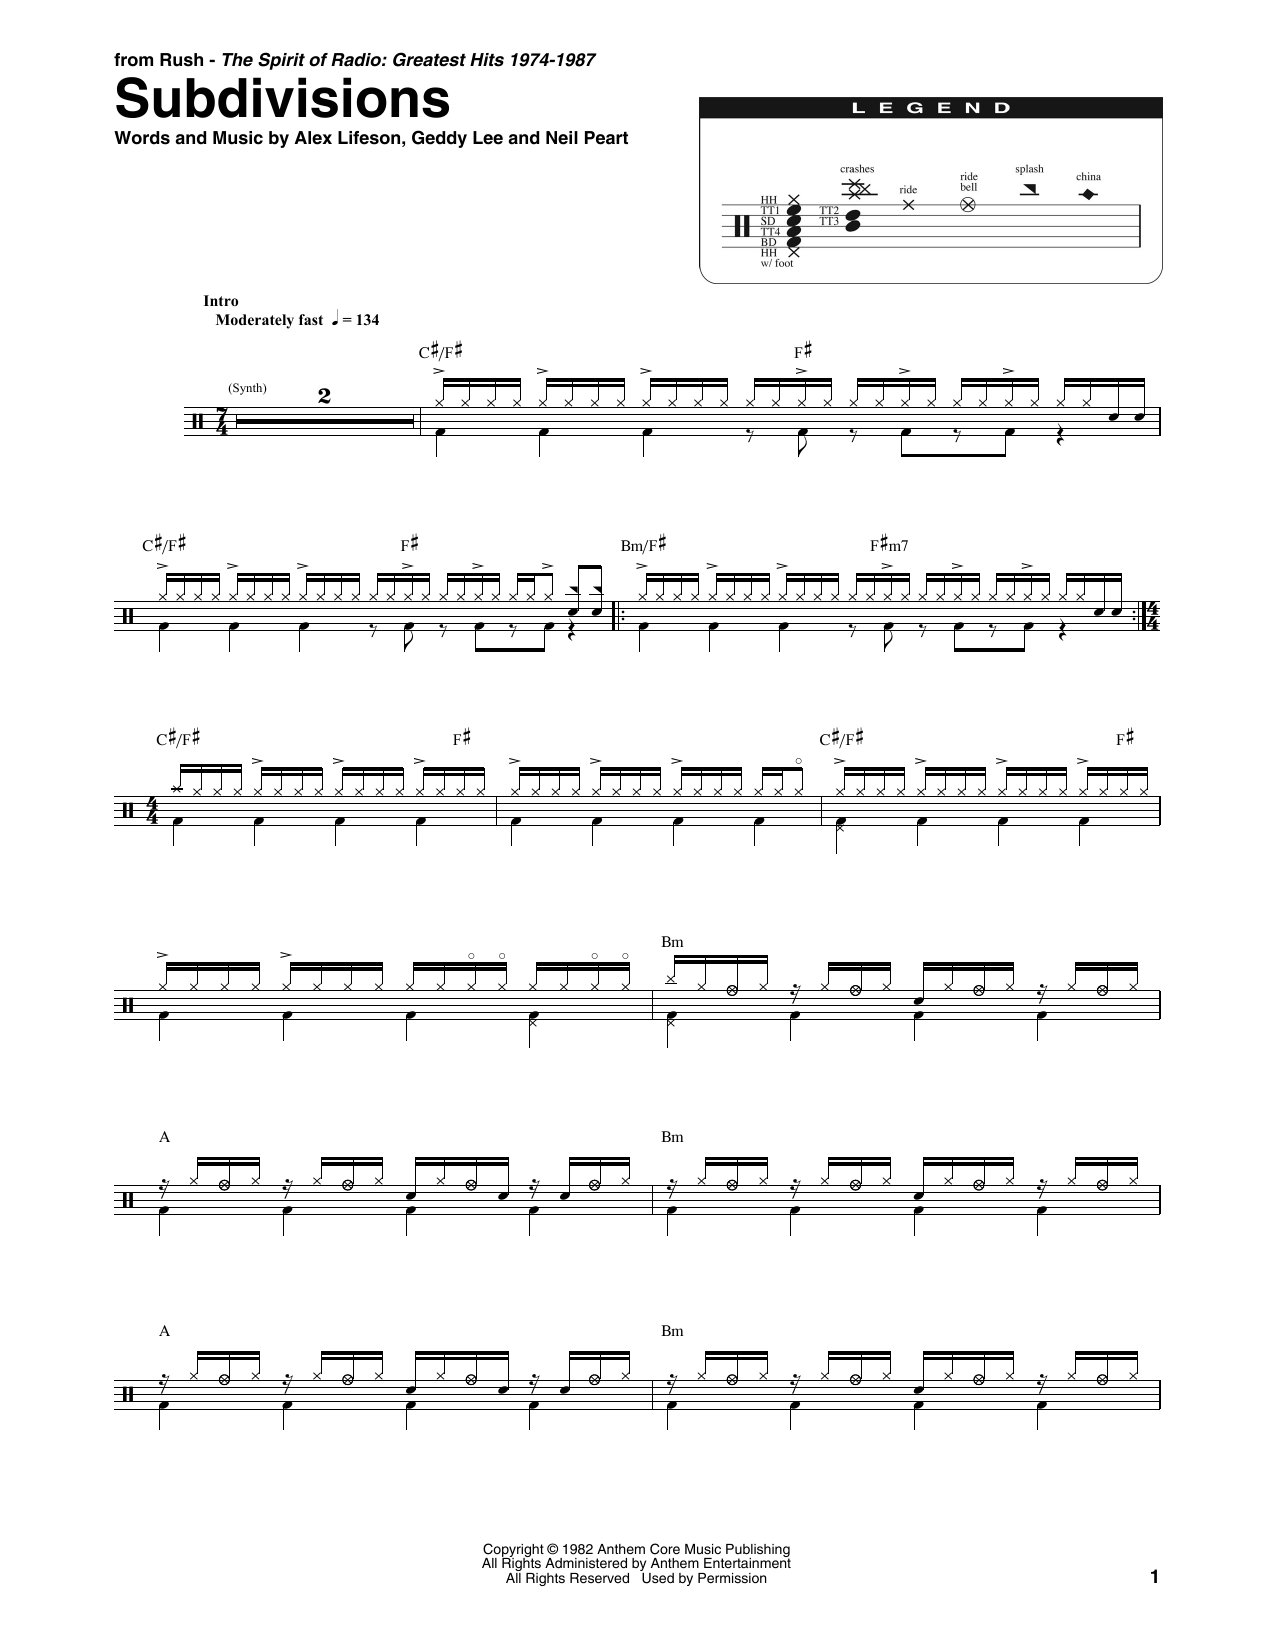 Rush Subdivisions Sheet Music Notes & Chords for Guitar Tab (Single Guitar) - Download or Print PDF